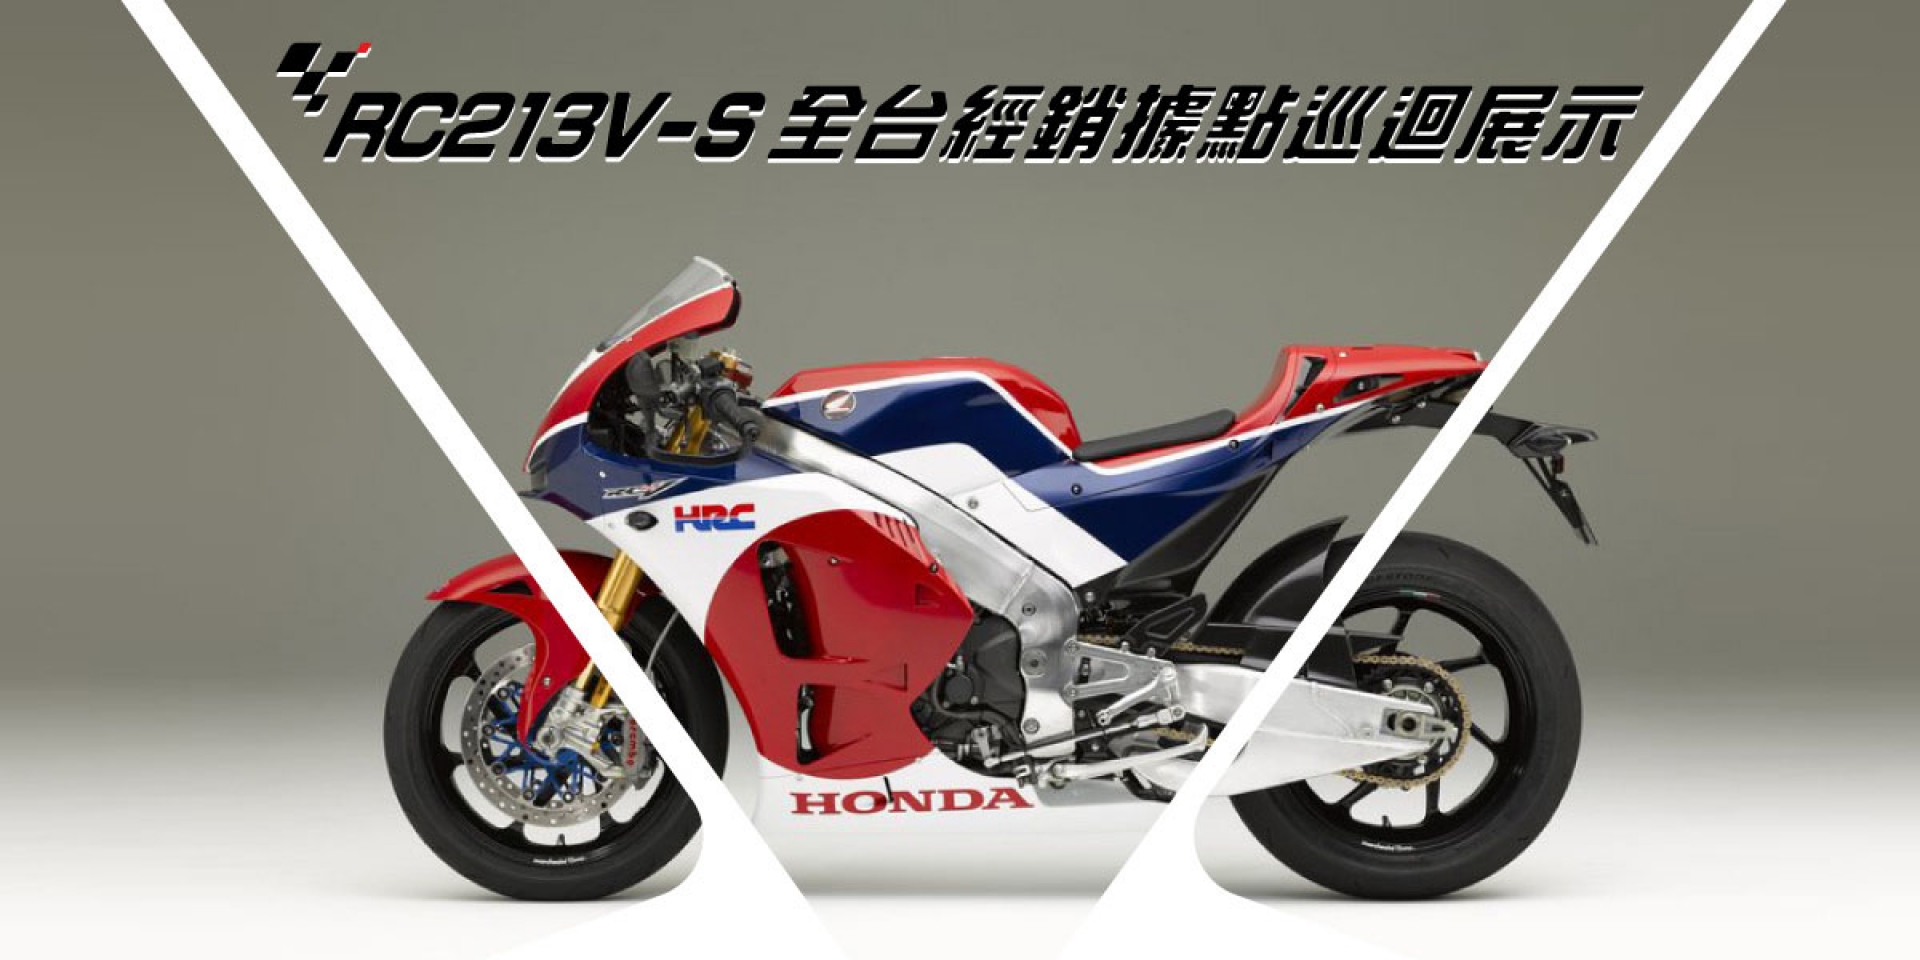 2023 Honda Motorcycle全台經銷據點巡迴活動 RC213V-S傳奇名駒特展開跑 周末二輪品牌講座同步舉行